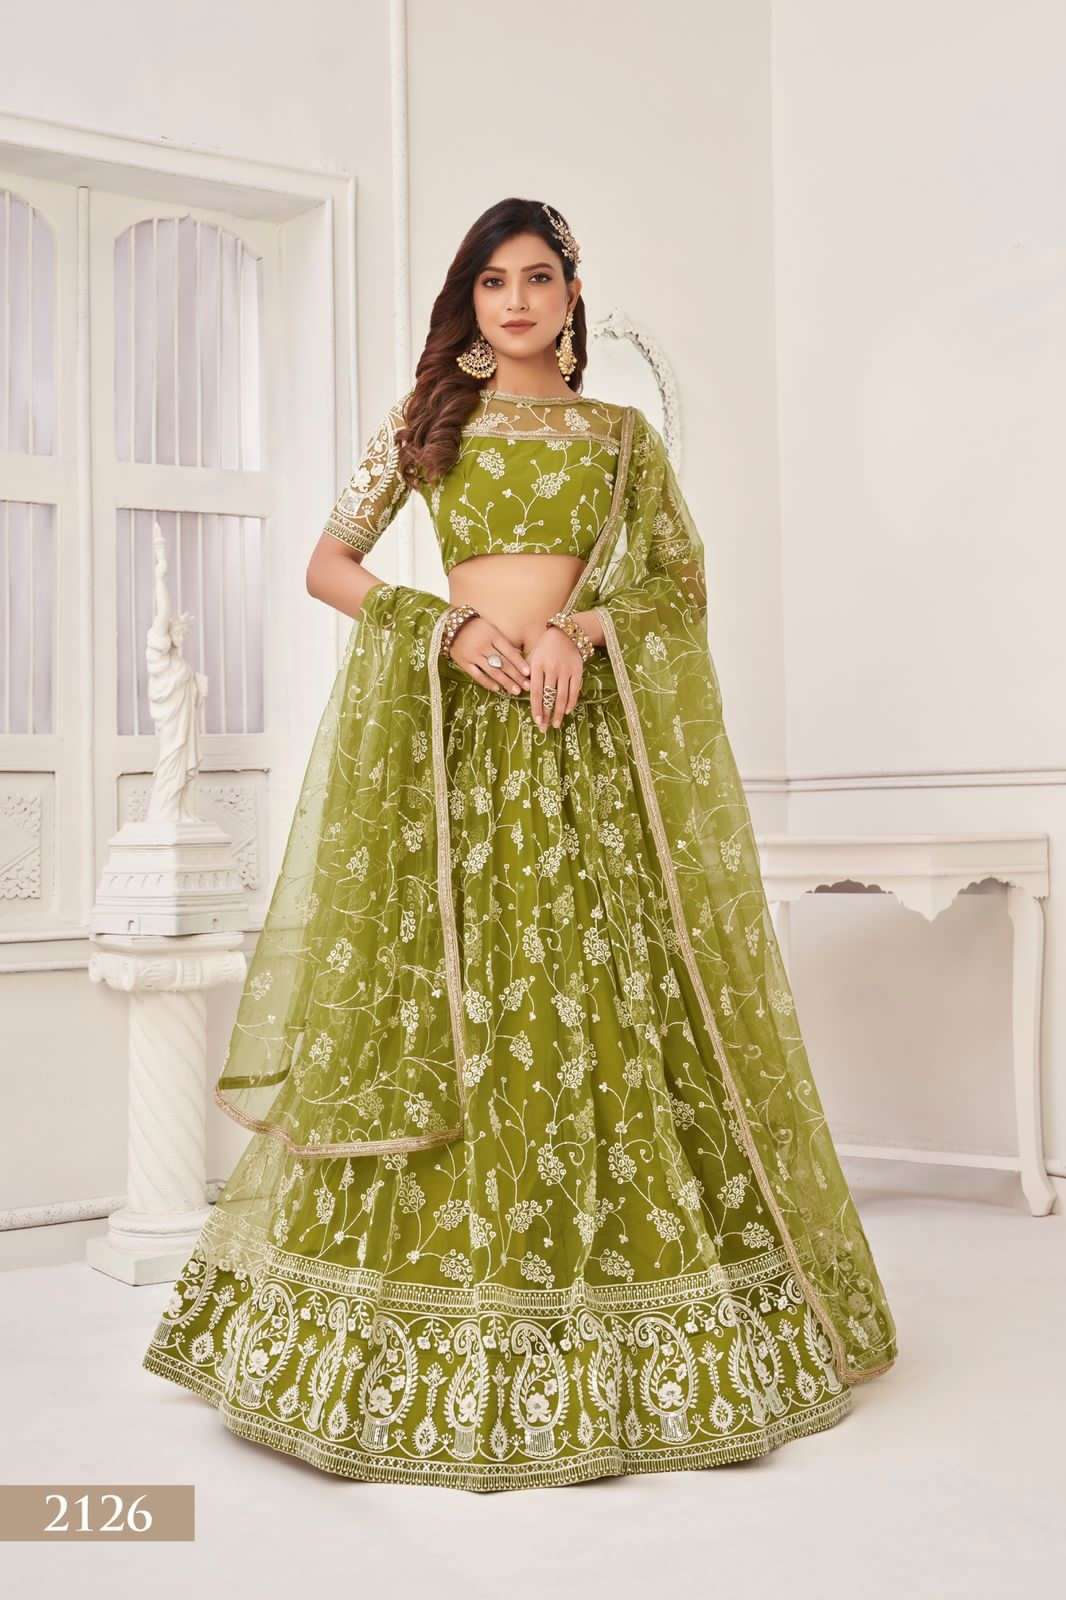 Kelaya Vol-5 By Narayani Fashion House 2122 To 2126 Series Indian Traditional Beautiful Stylish Designer Banarasi Silk Jacquard Embroidered Party Wear Net Lehengas At Wholesale Price